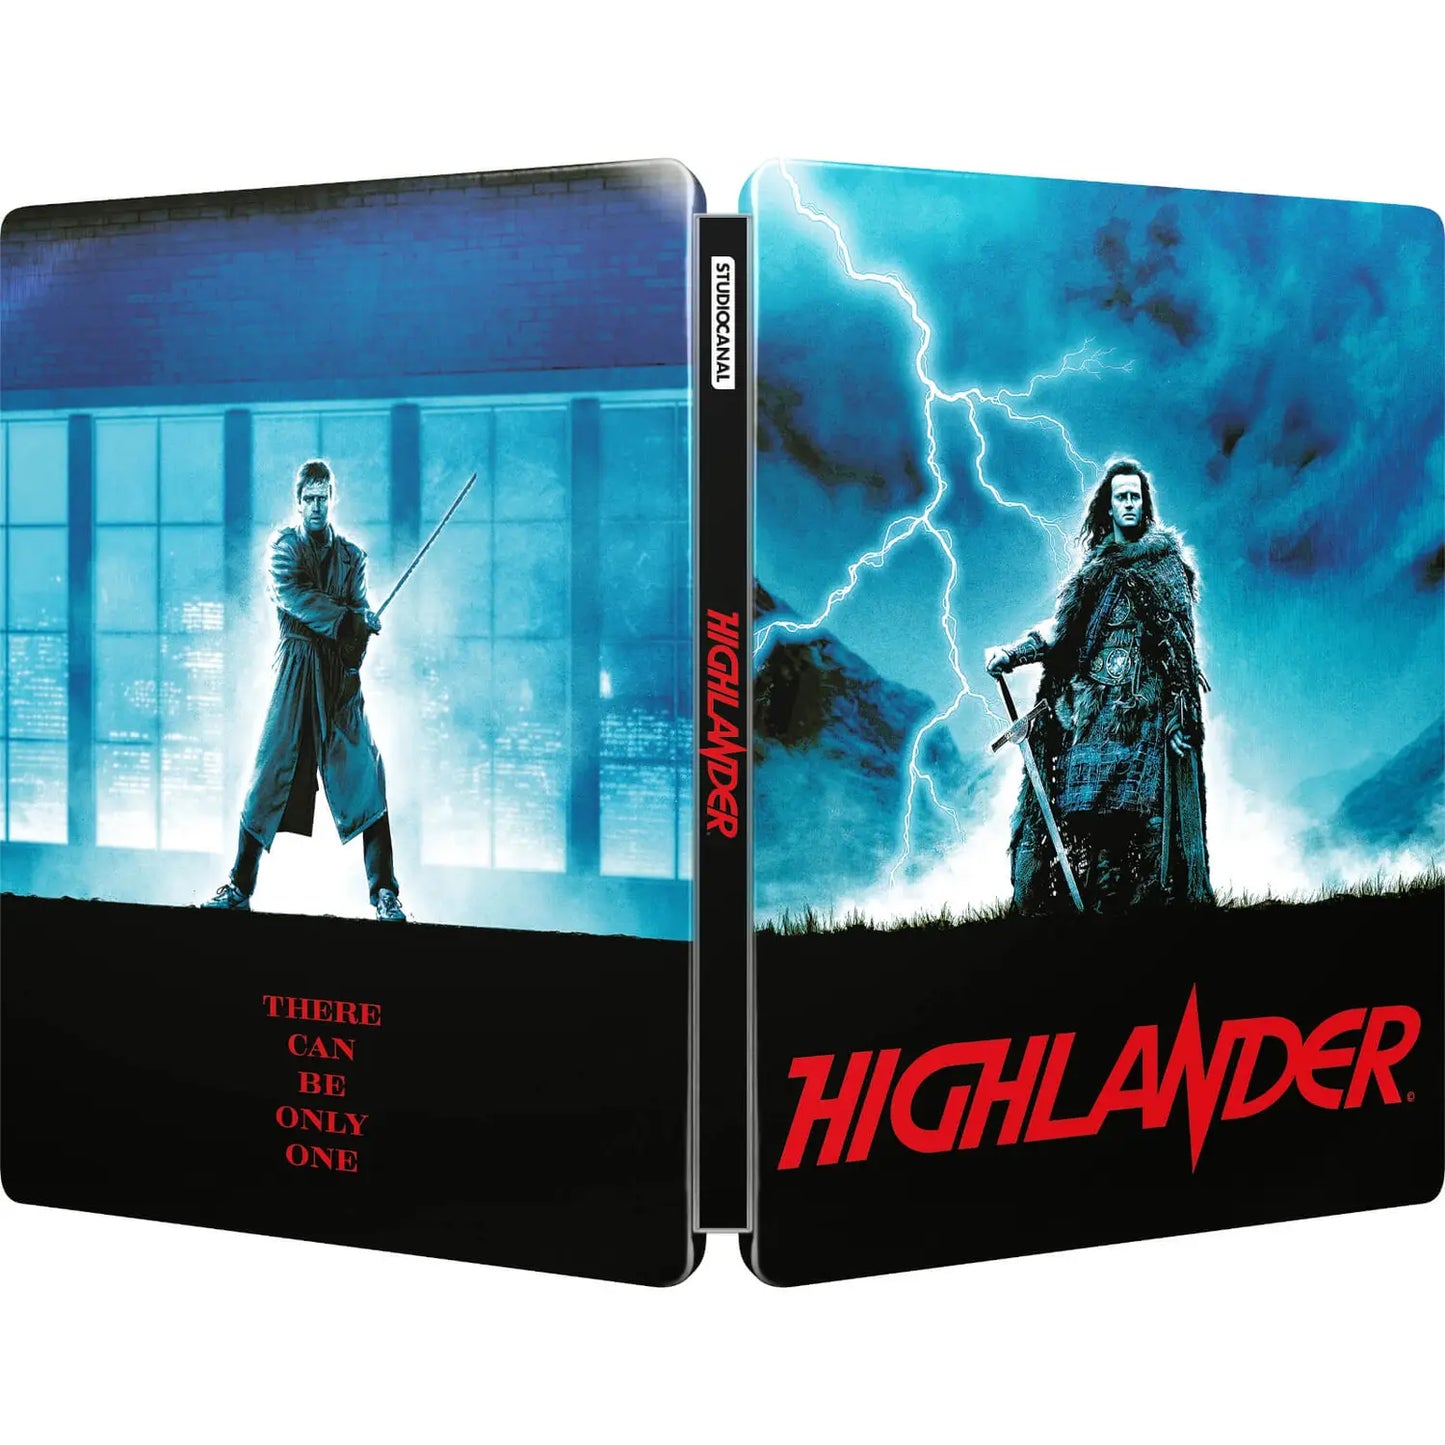 Highlander 4K UHD + Blu-ray SteelBook (StudioCanal/Region Free/B)